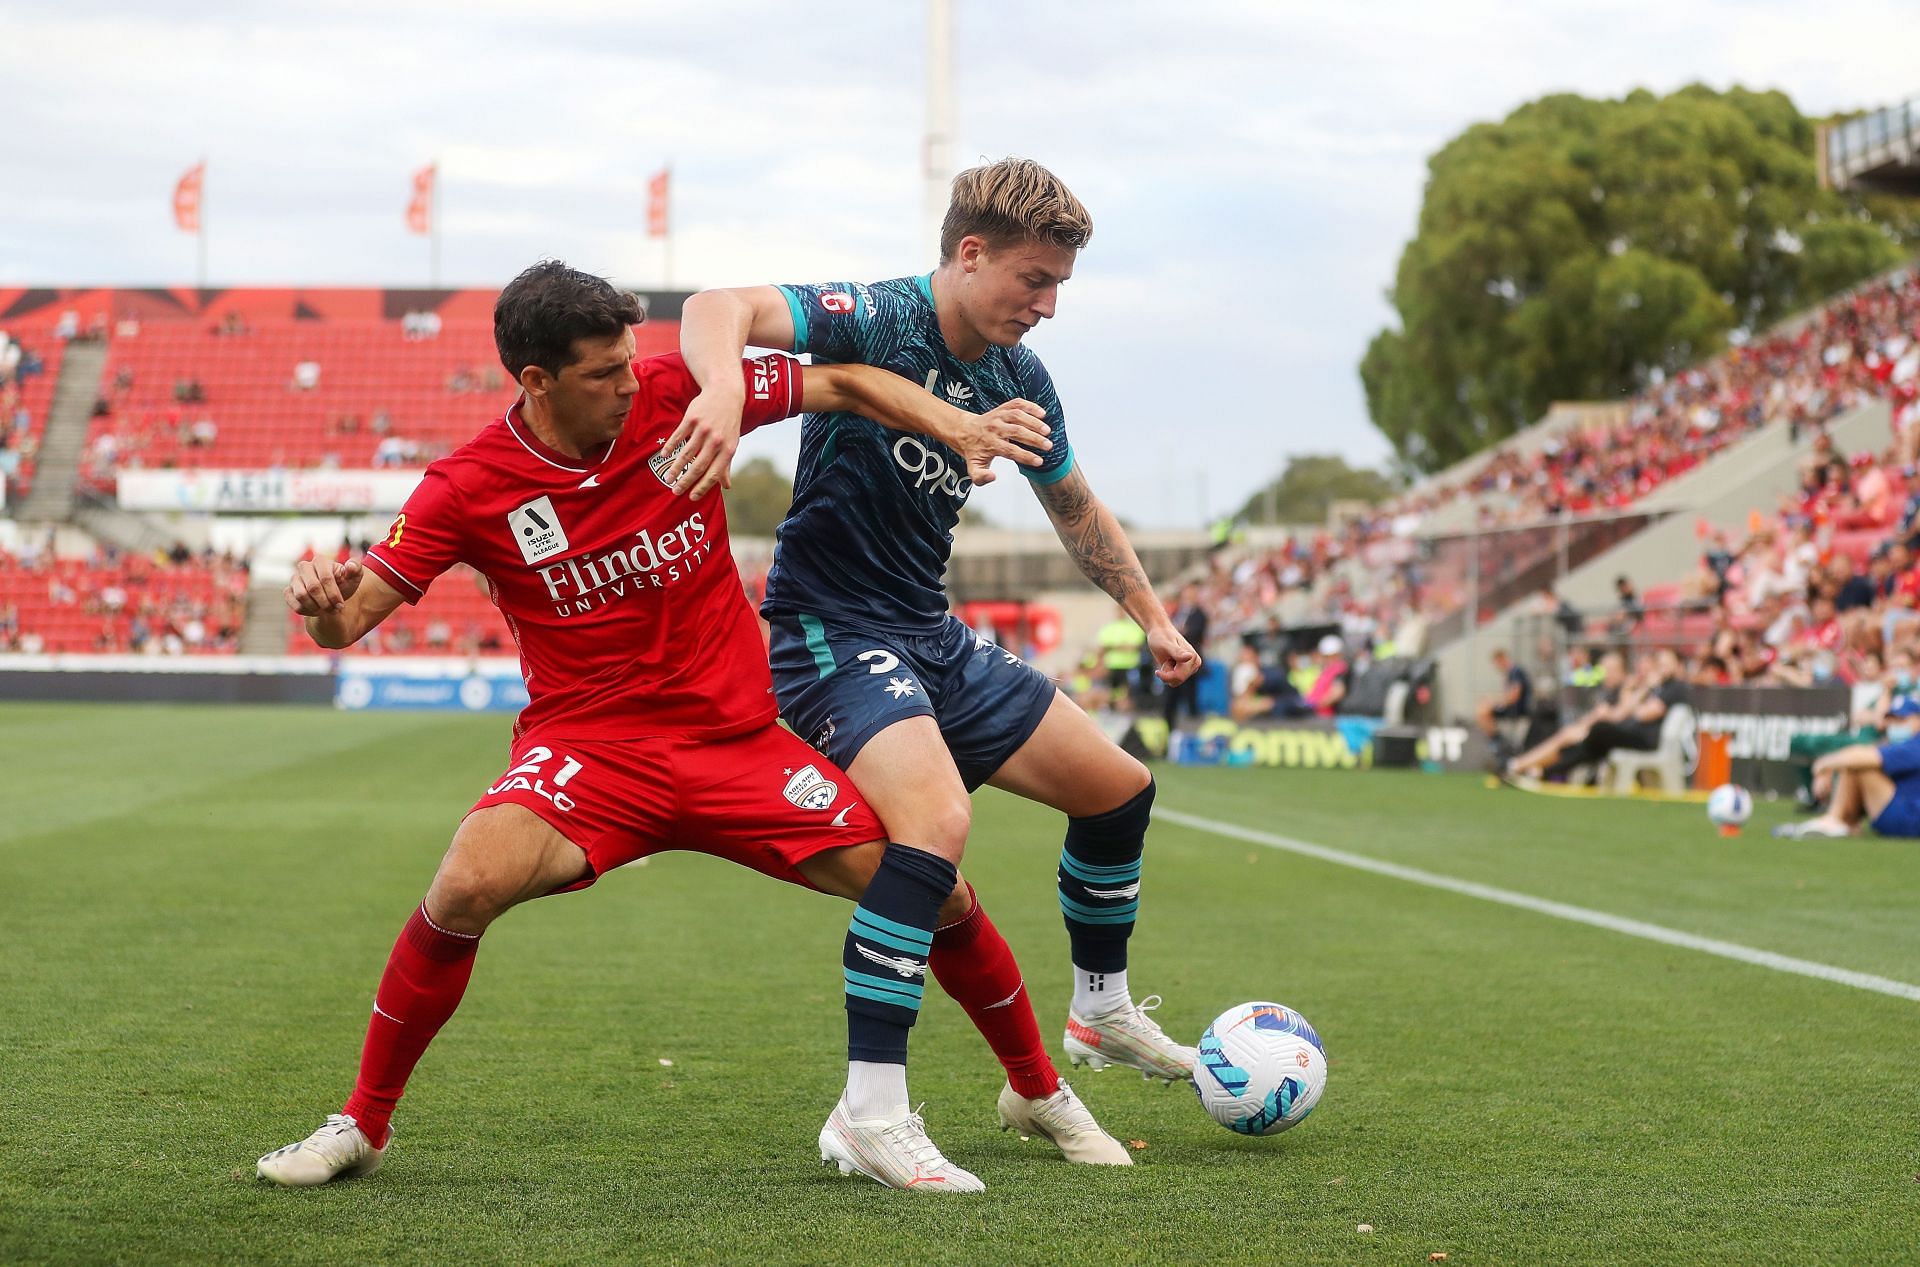 Adelaide United take on Wellington Phoenix this weekend